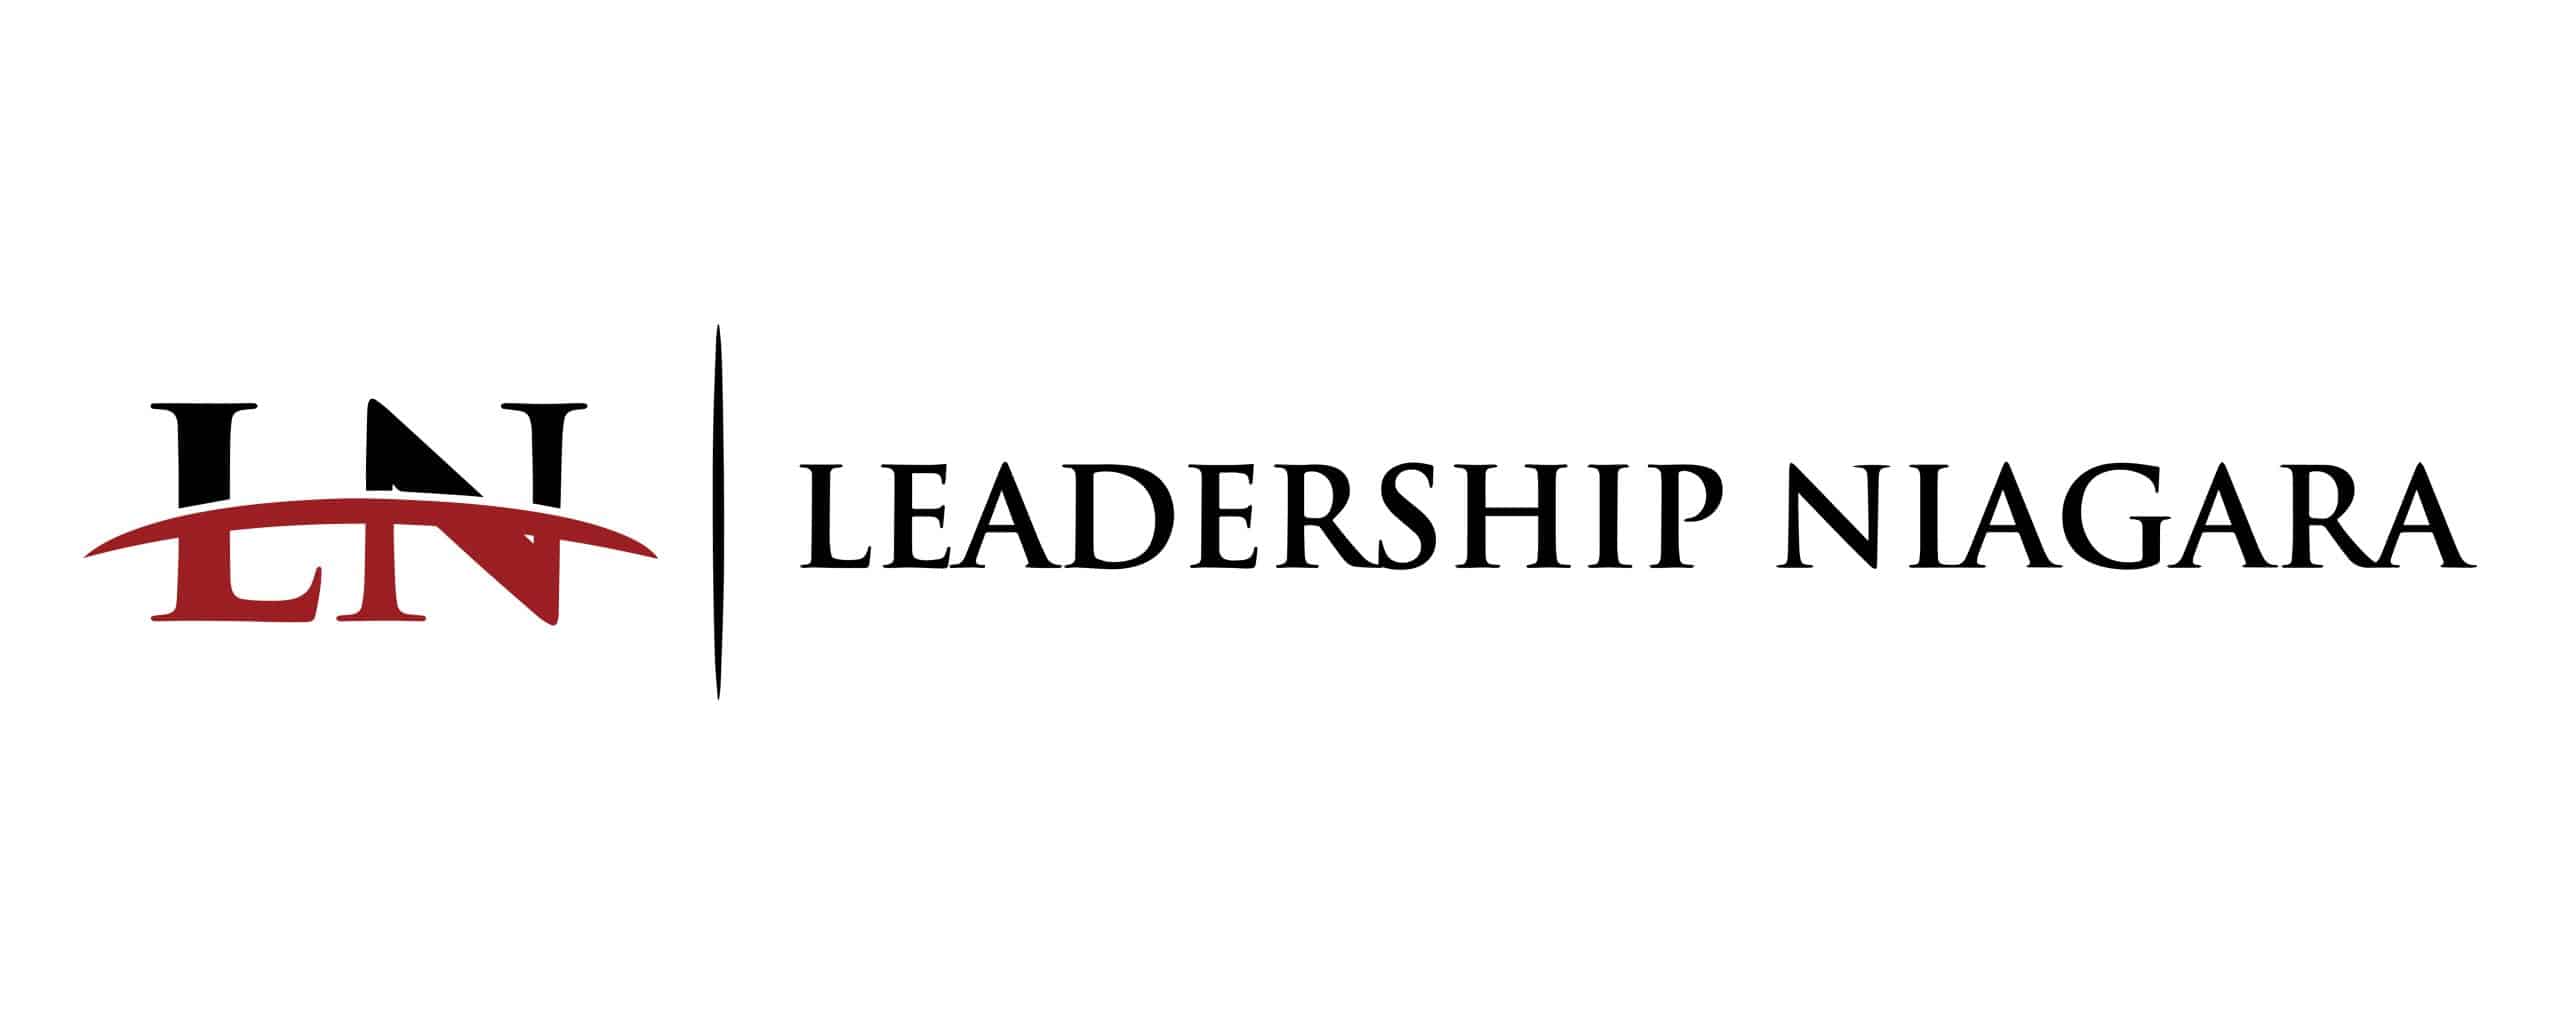 Leadership niagara logo